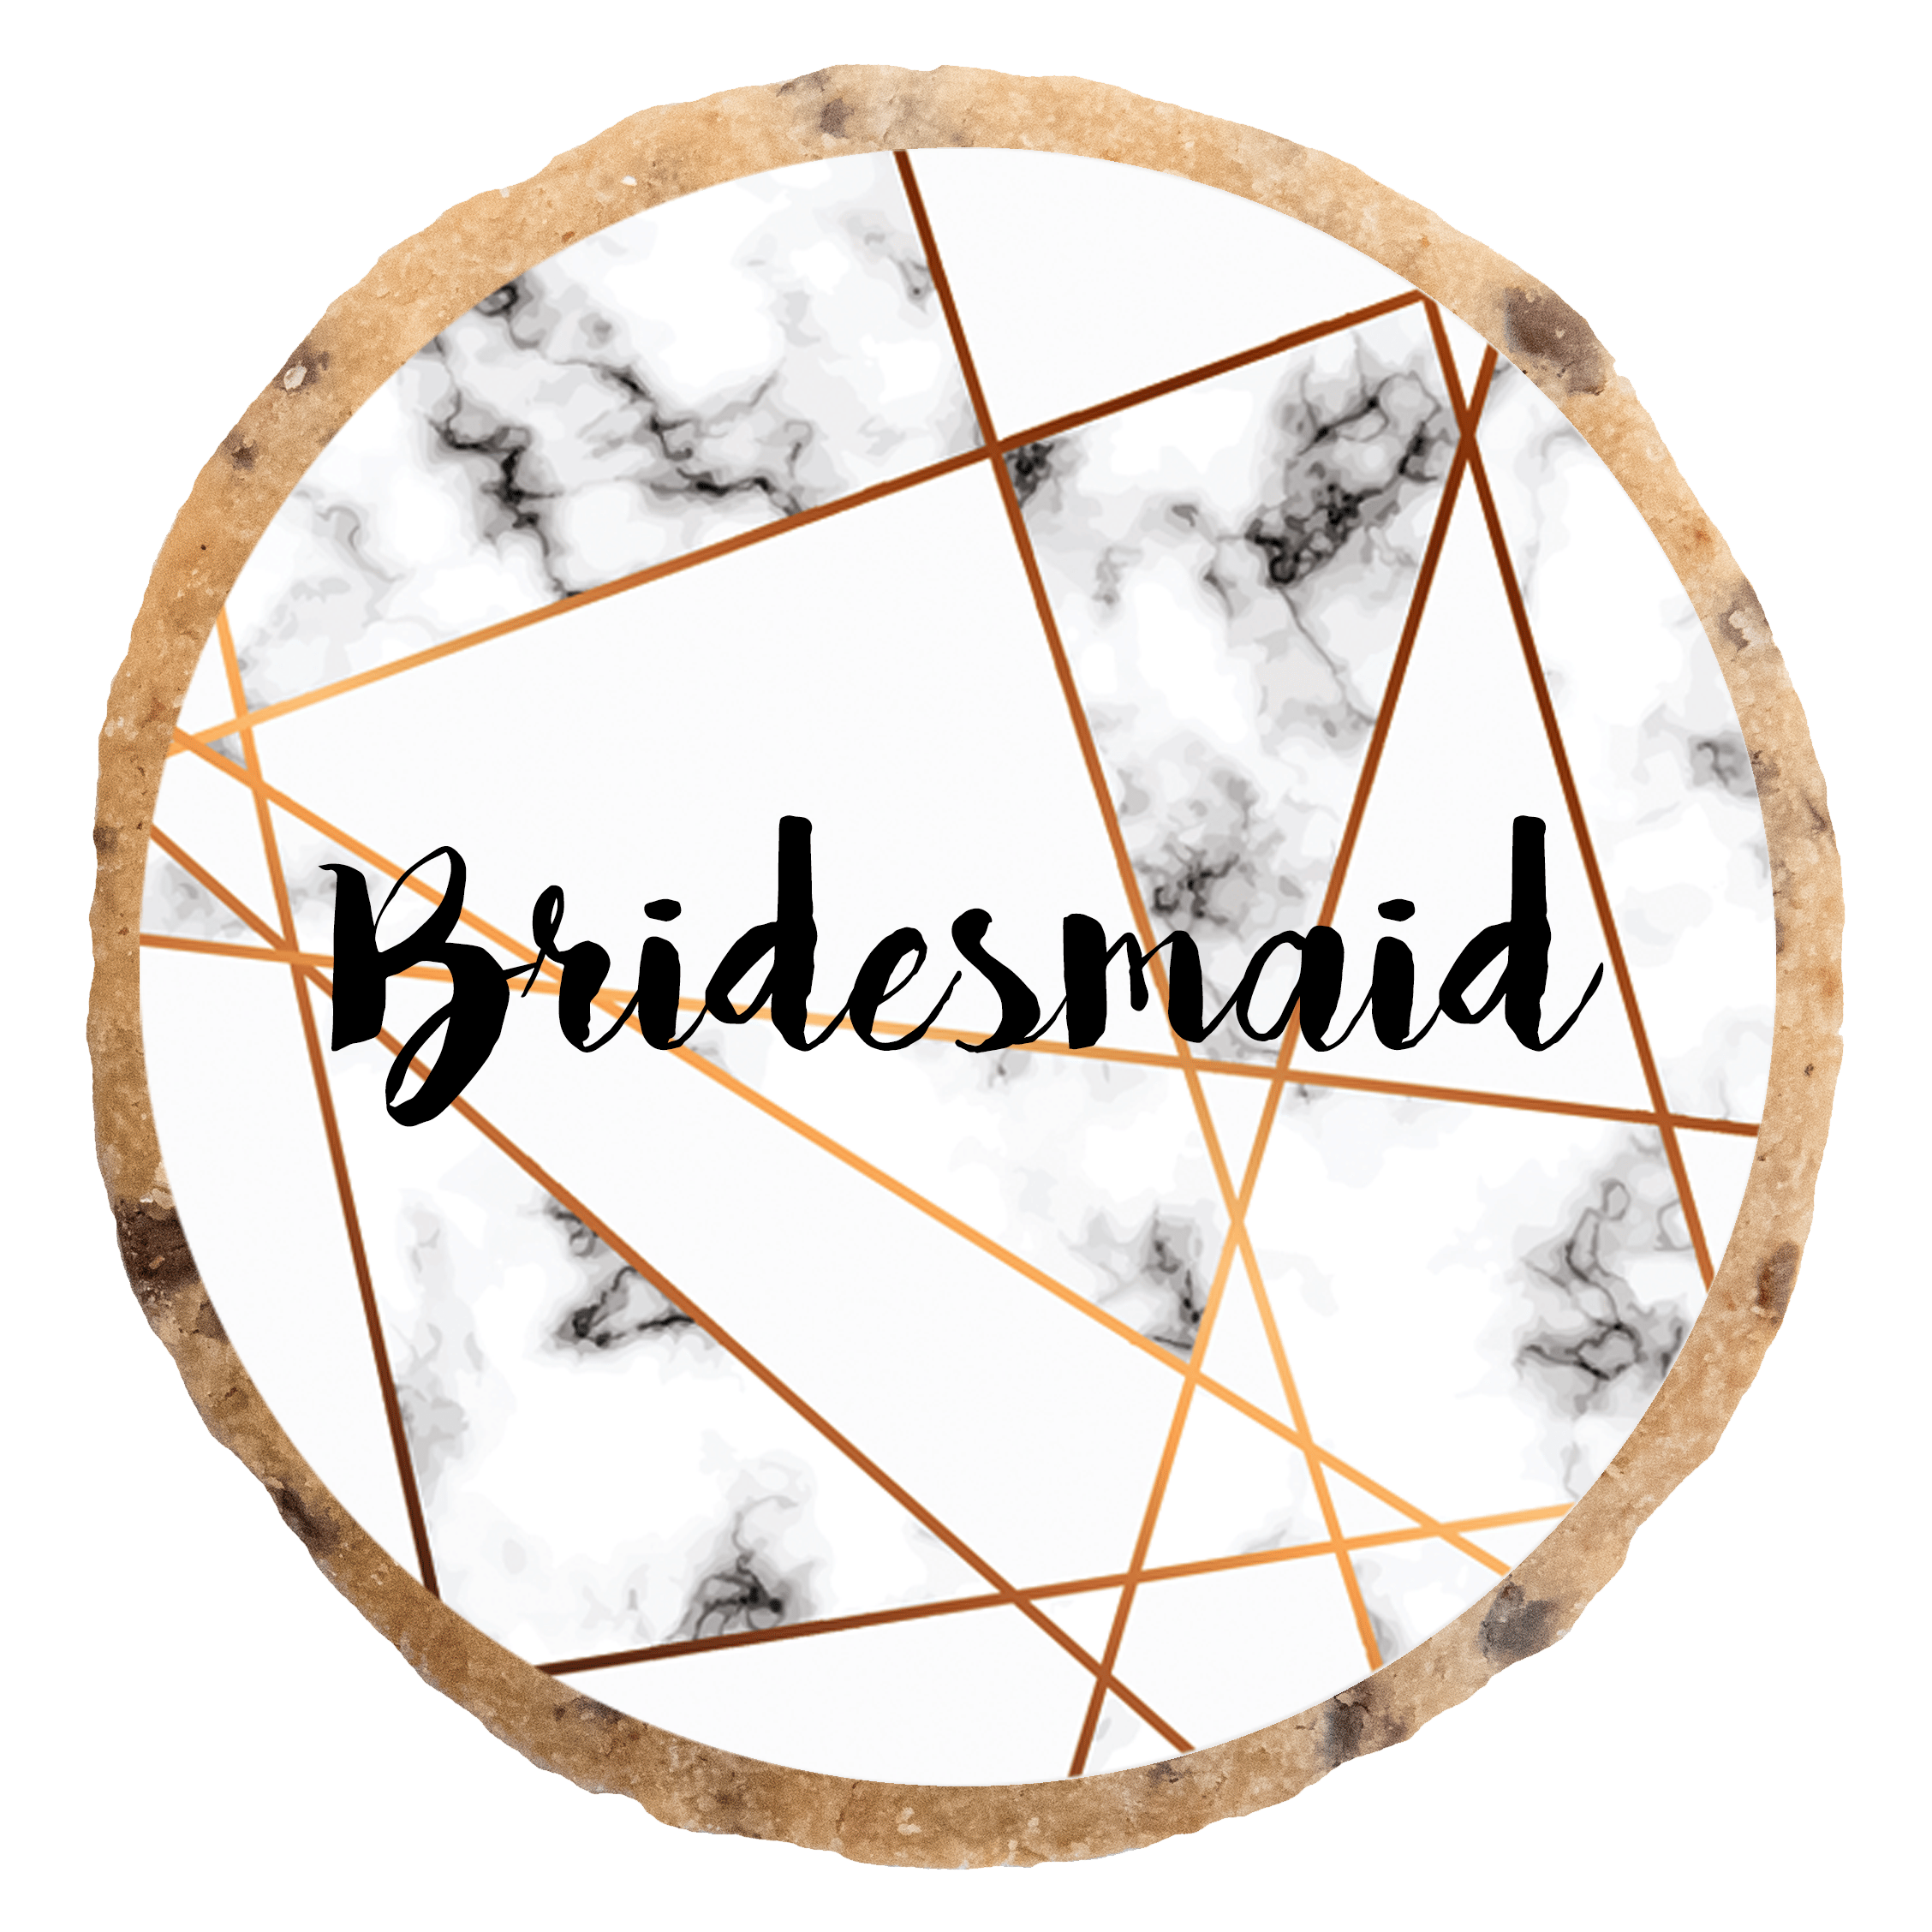 "Bridesmaid" MotivKEKS